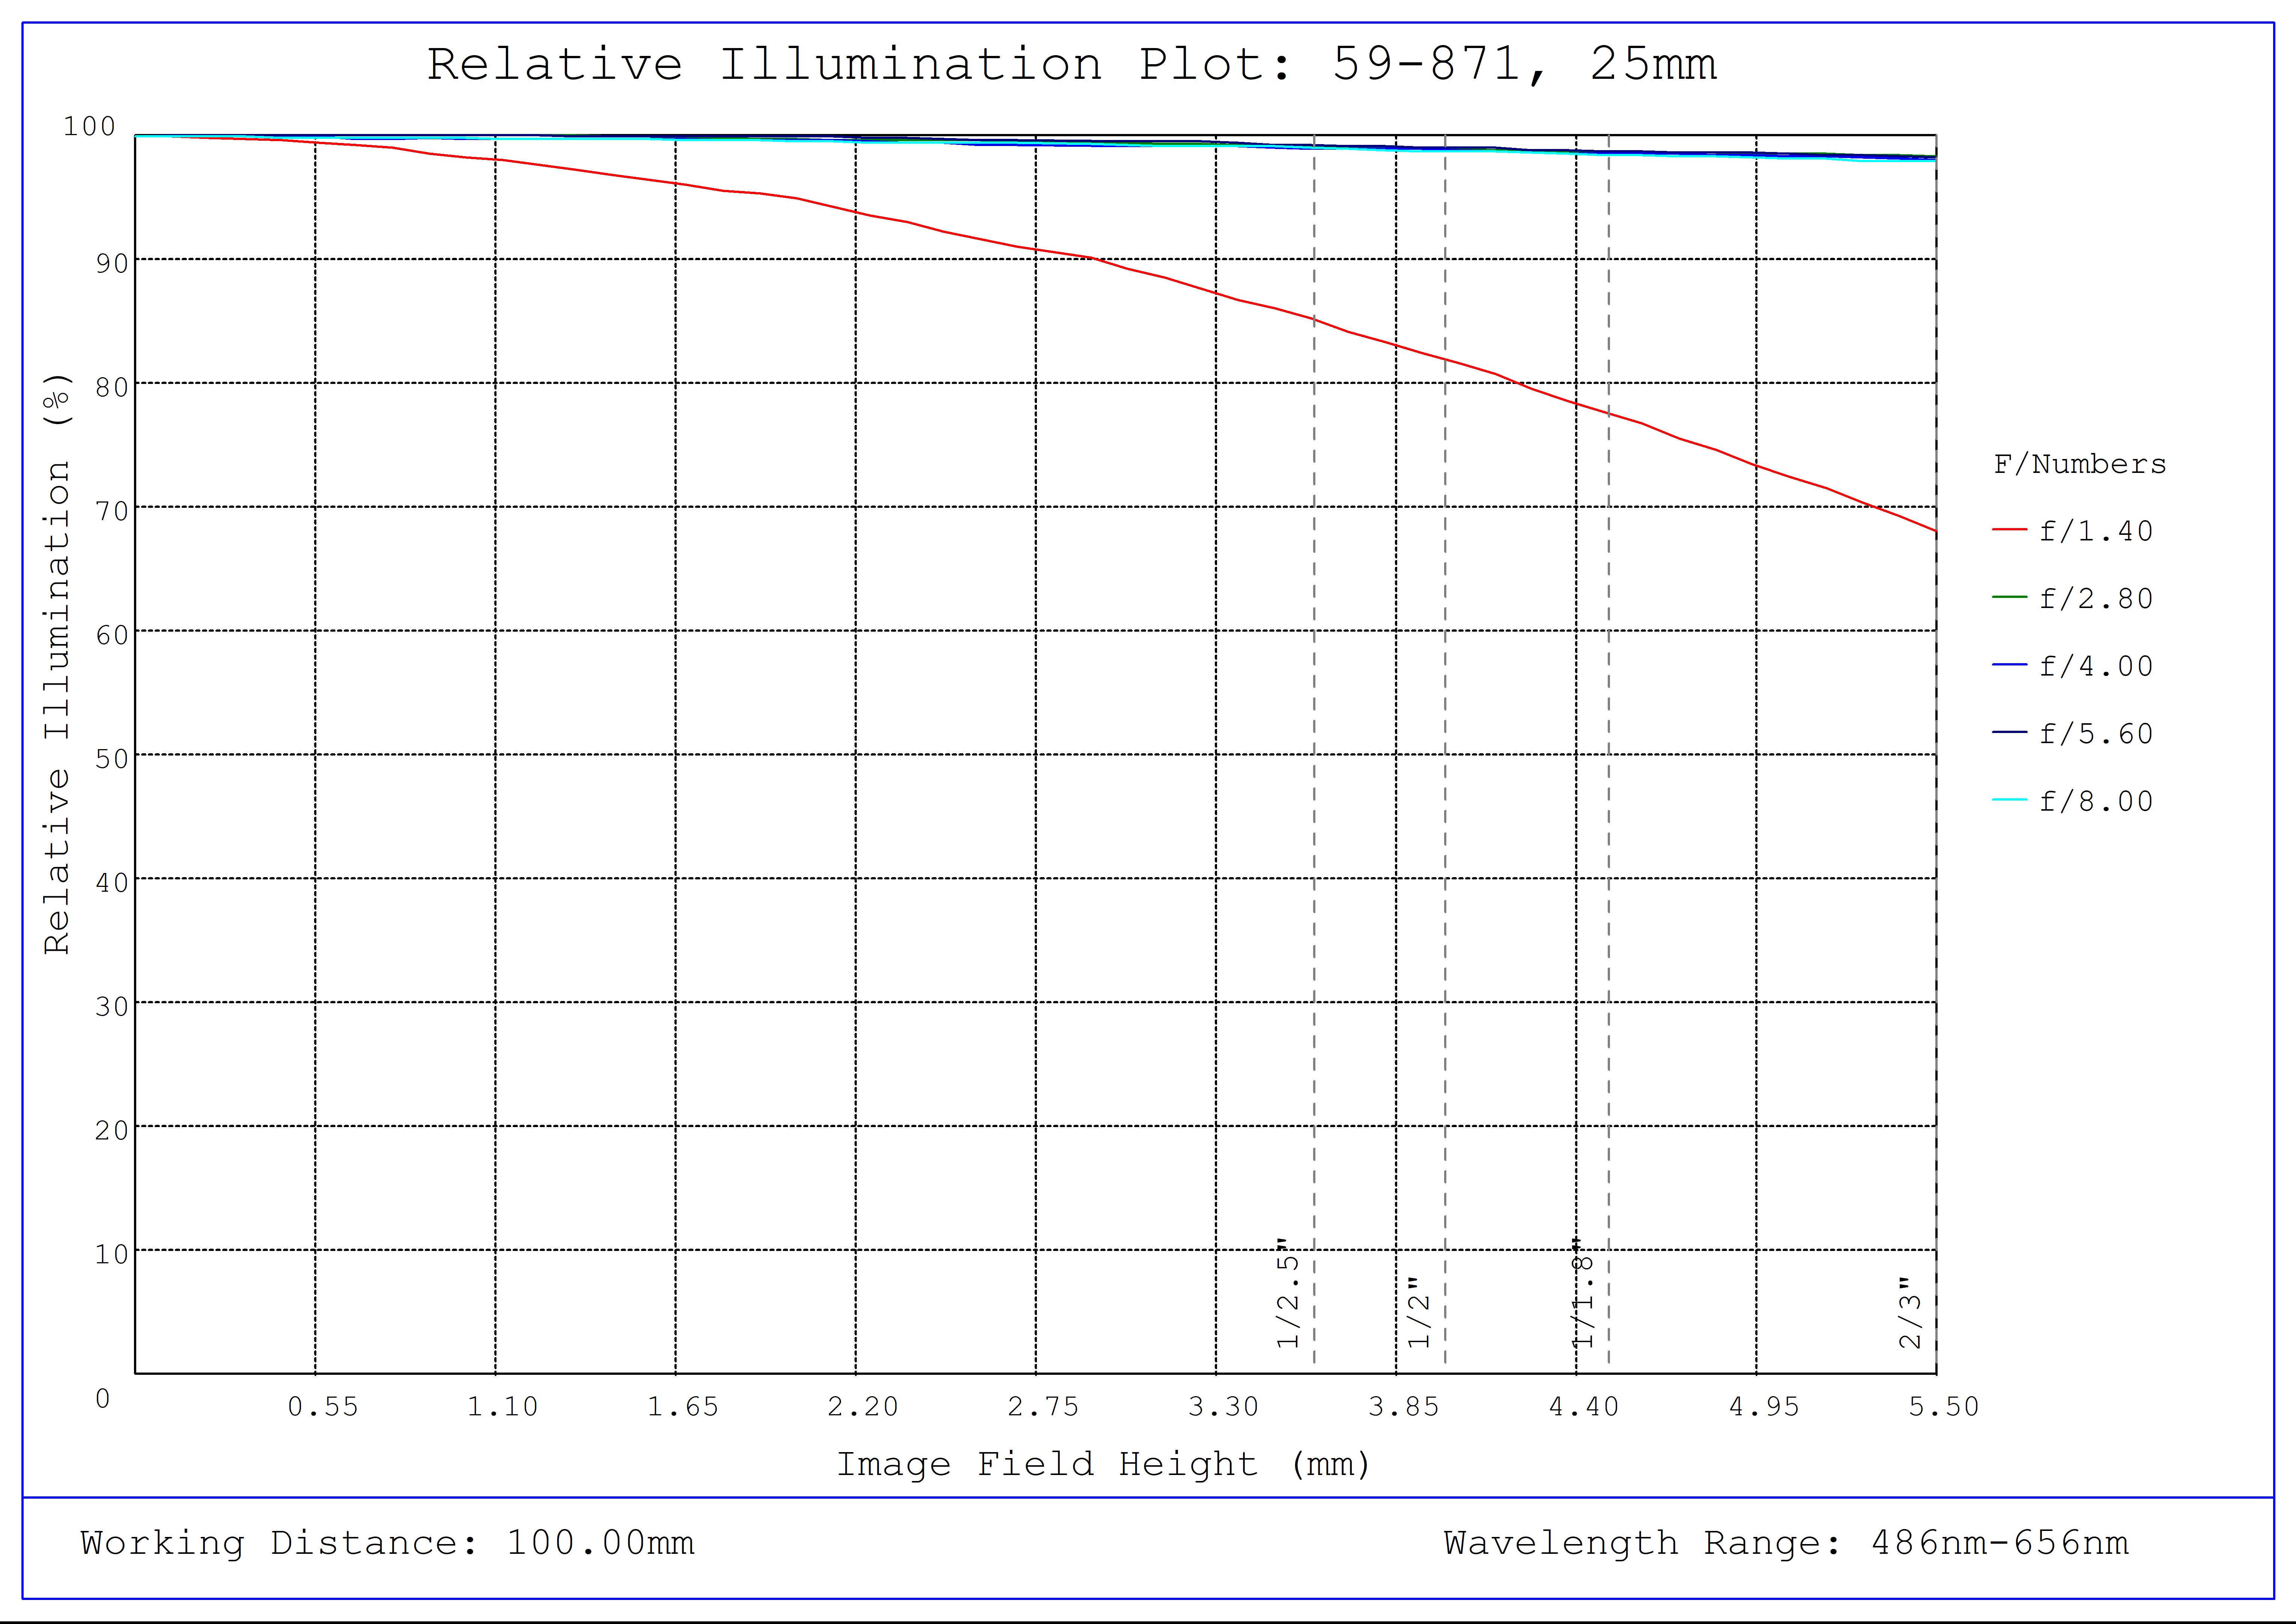 #59-871, 25mm C Series Fixed Focal Length Lens, Relative Illumination Plot